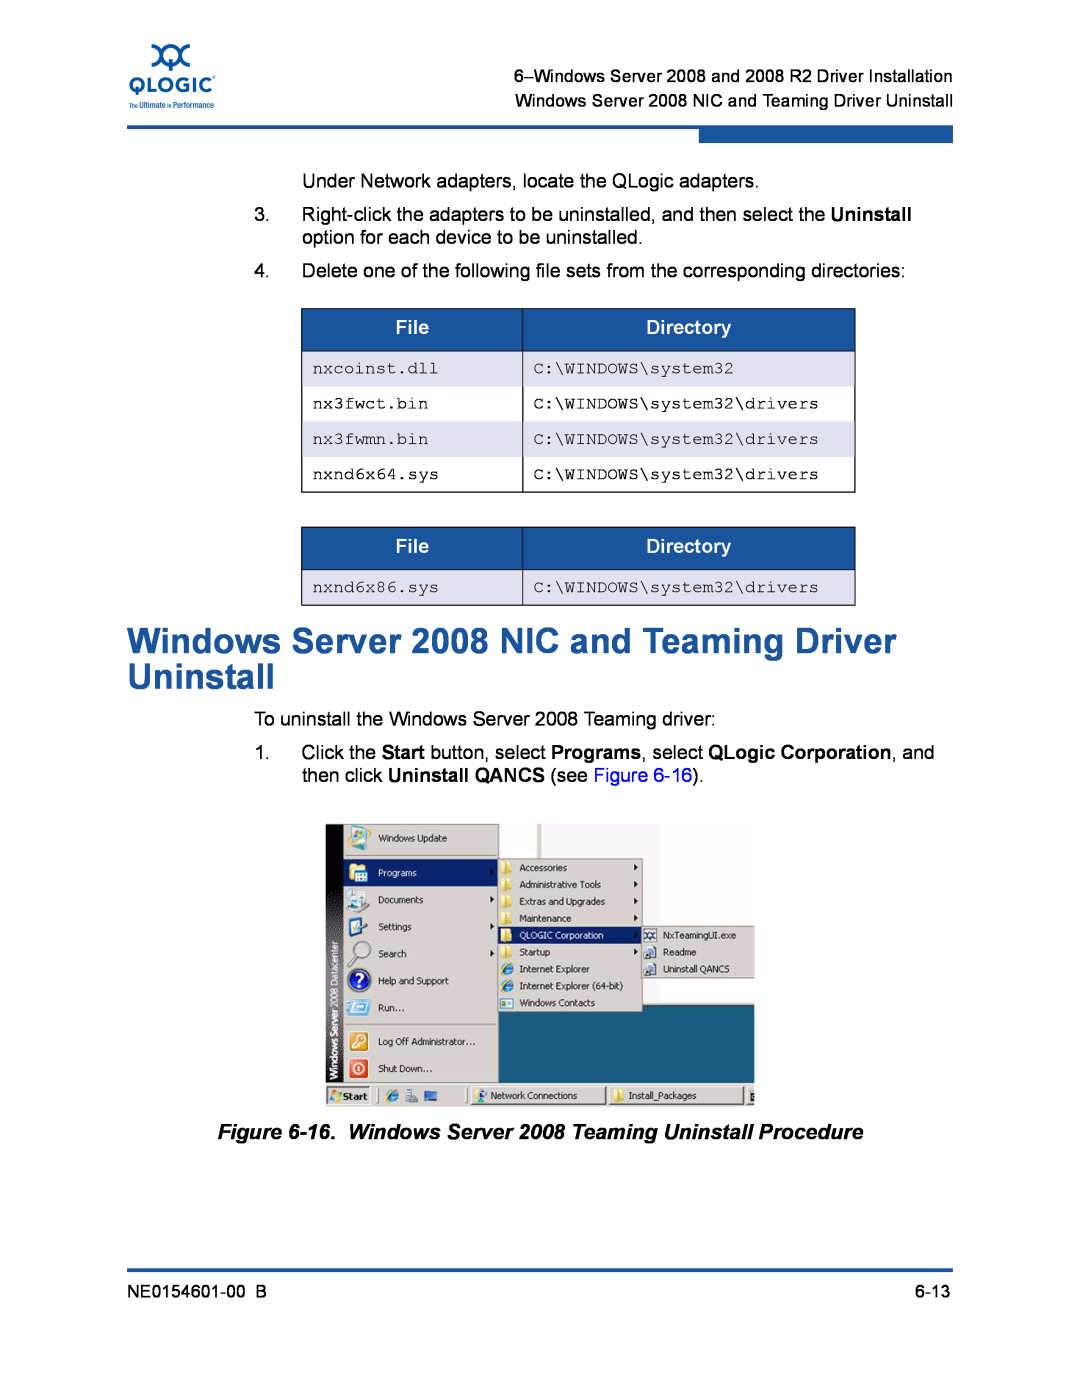 Q-Logic 3000 Windows Server 2008 NIC and Teaming Driver Uninstall, 16. Windows Server 2008 Teaming Uninstall Procedure 